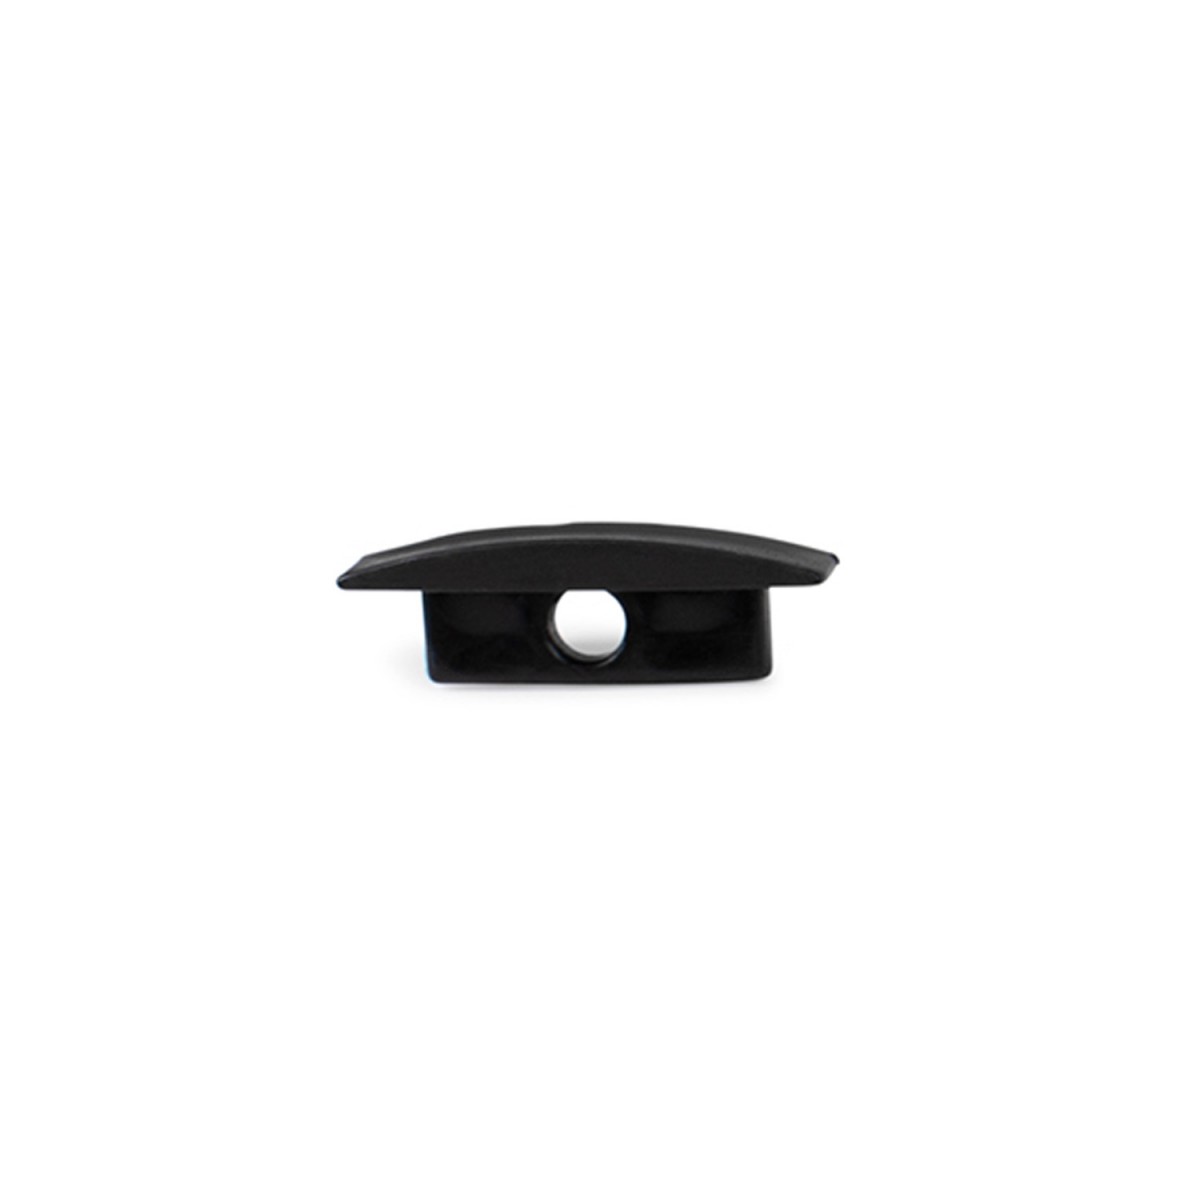 Caps for profile PXG-205 - Black color